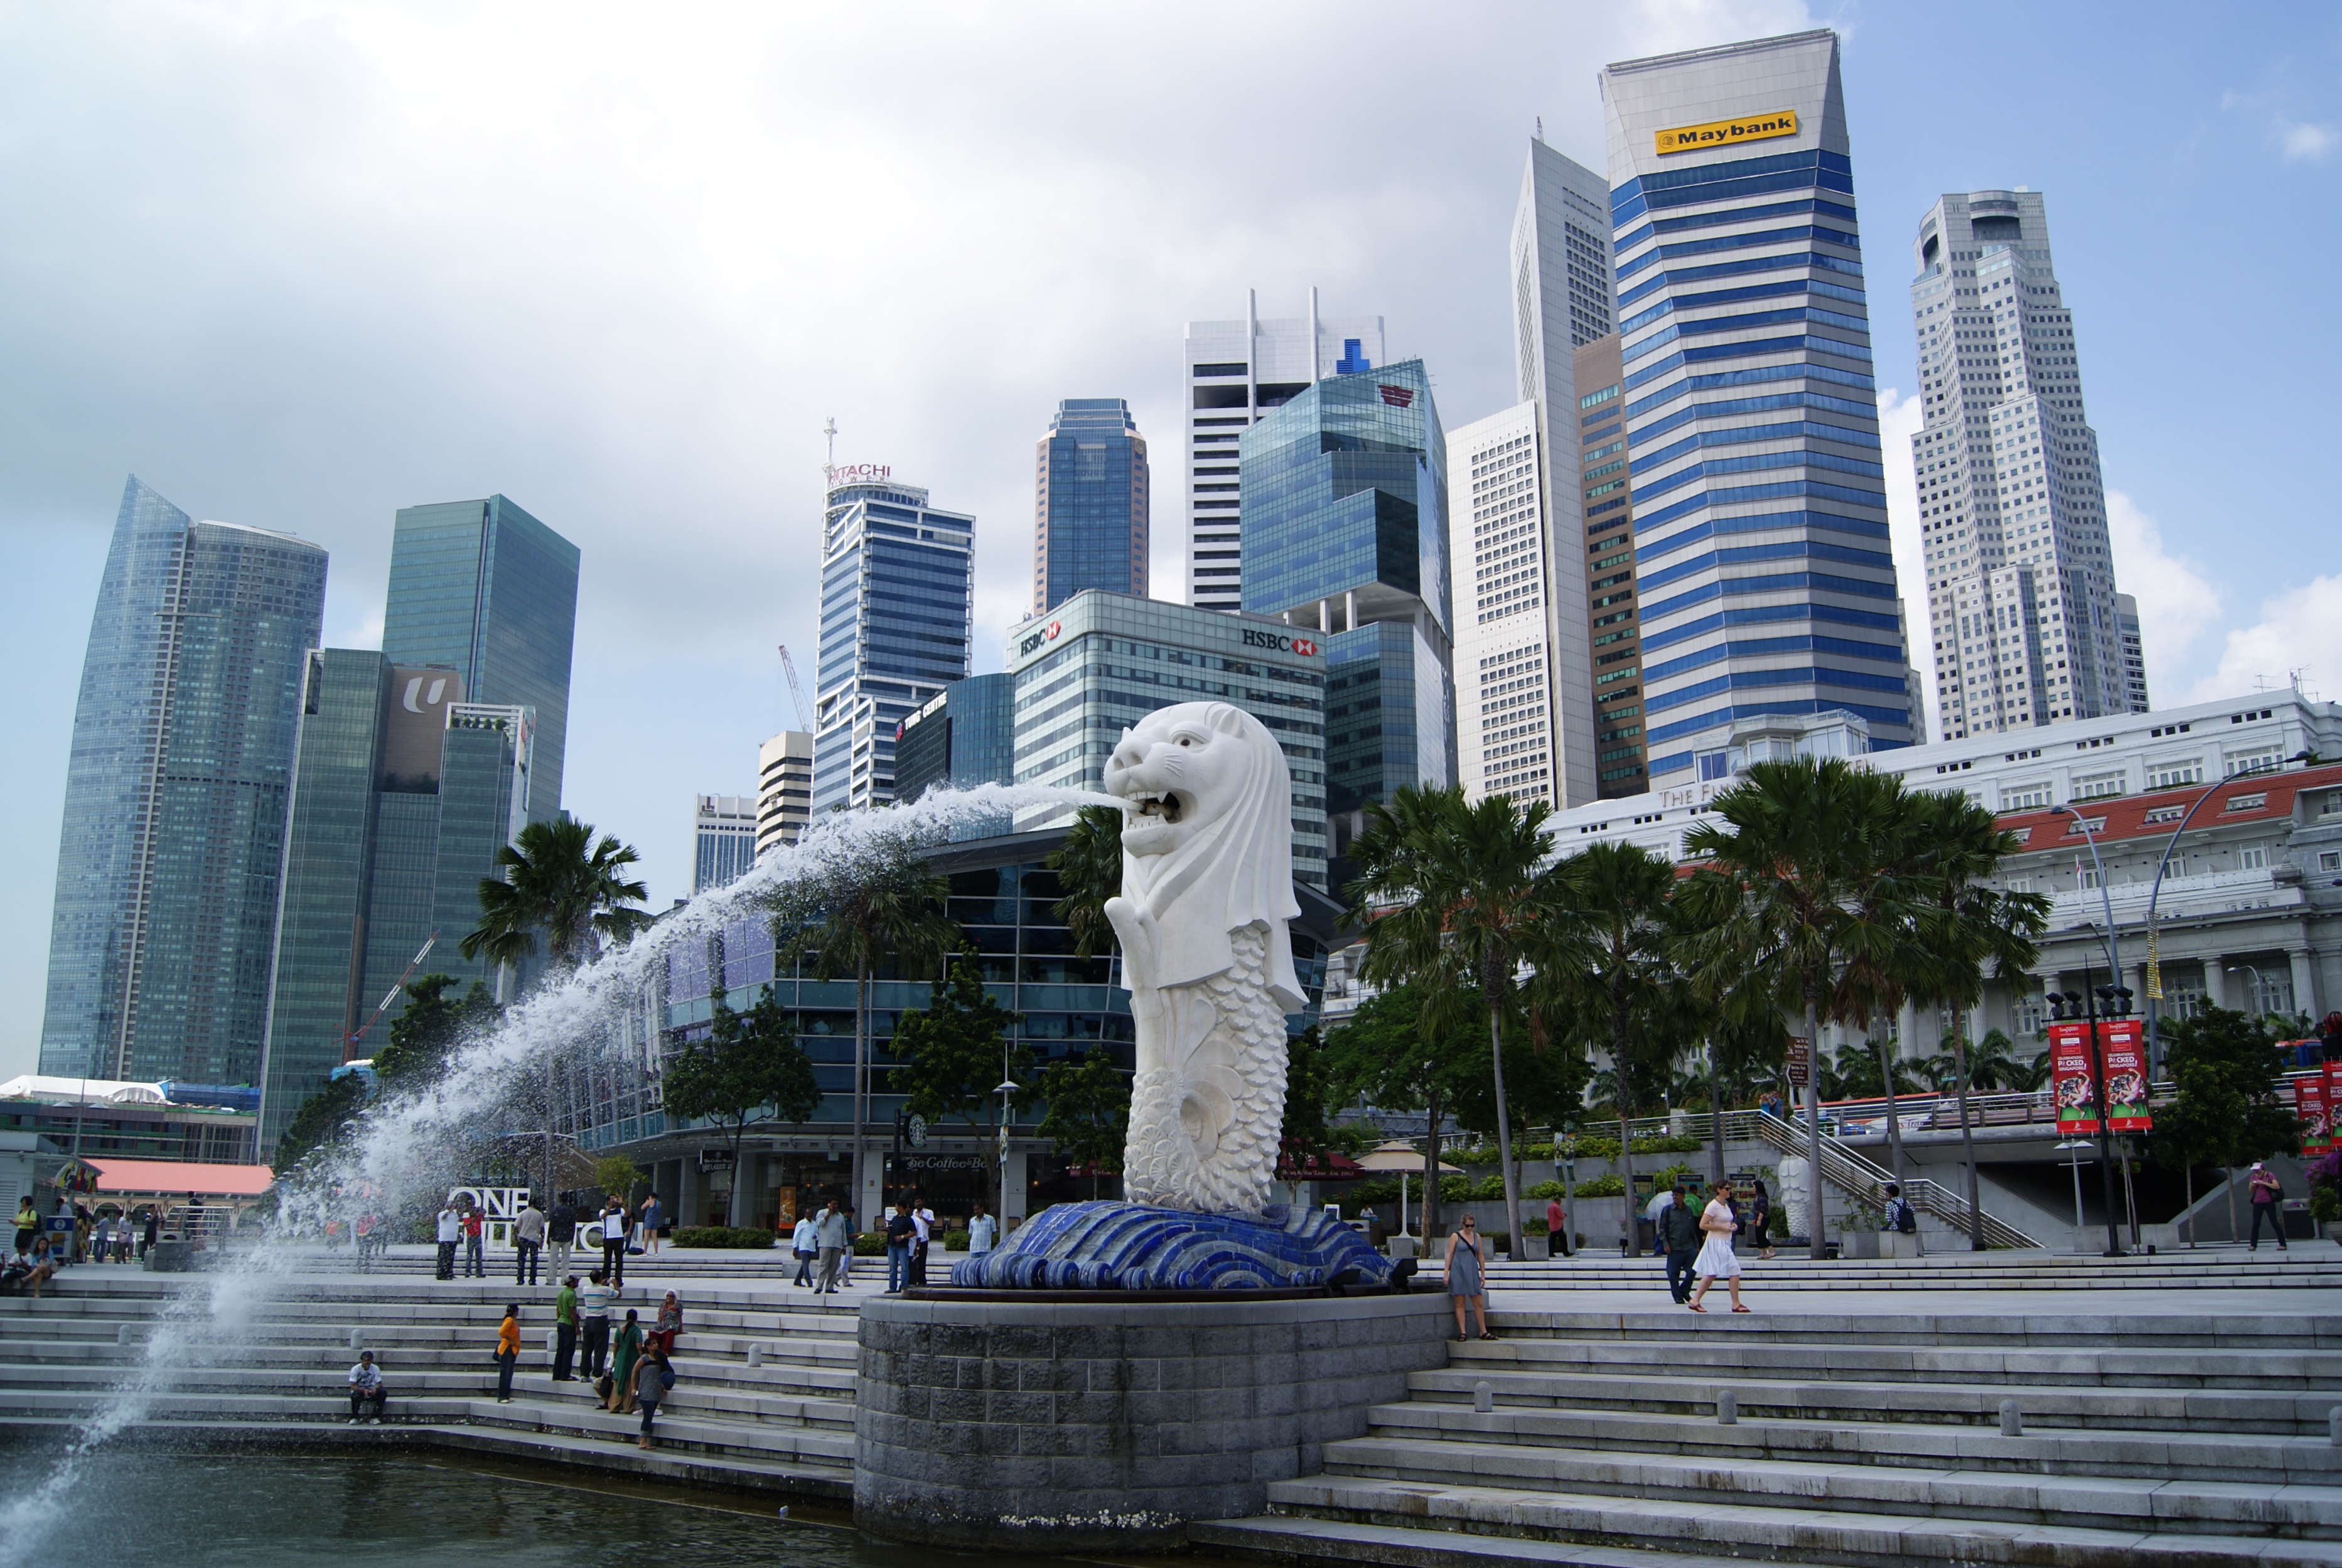 Grab-Singtel and Ant Group win digital bank licenses in Singapore